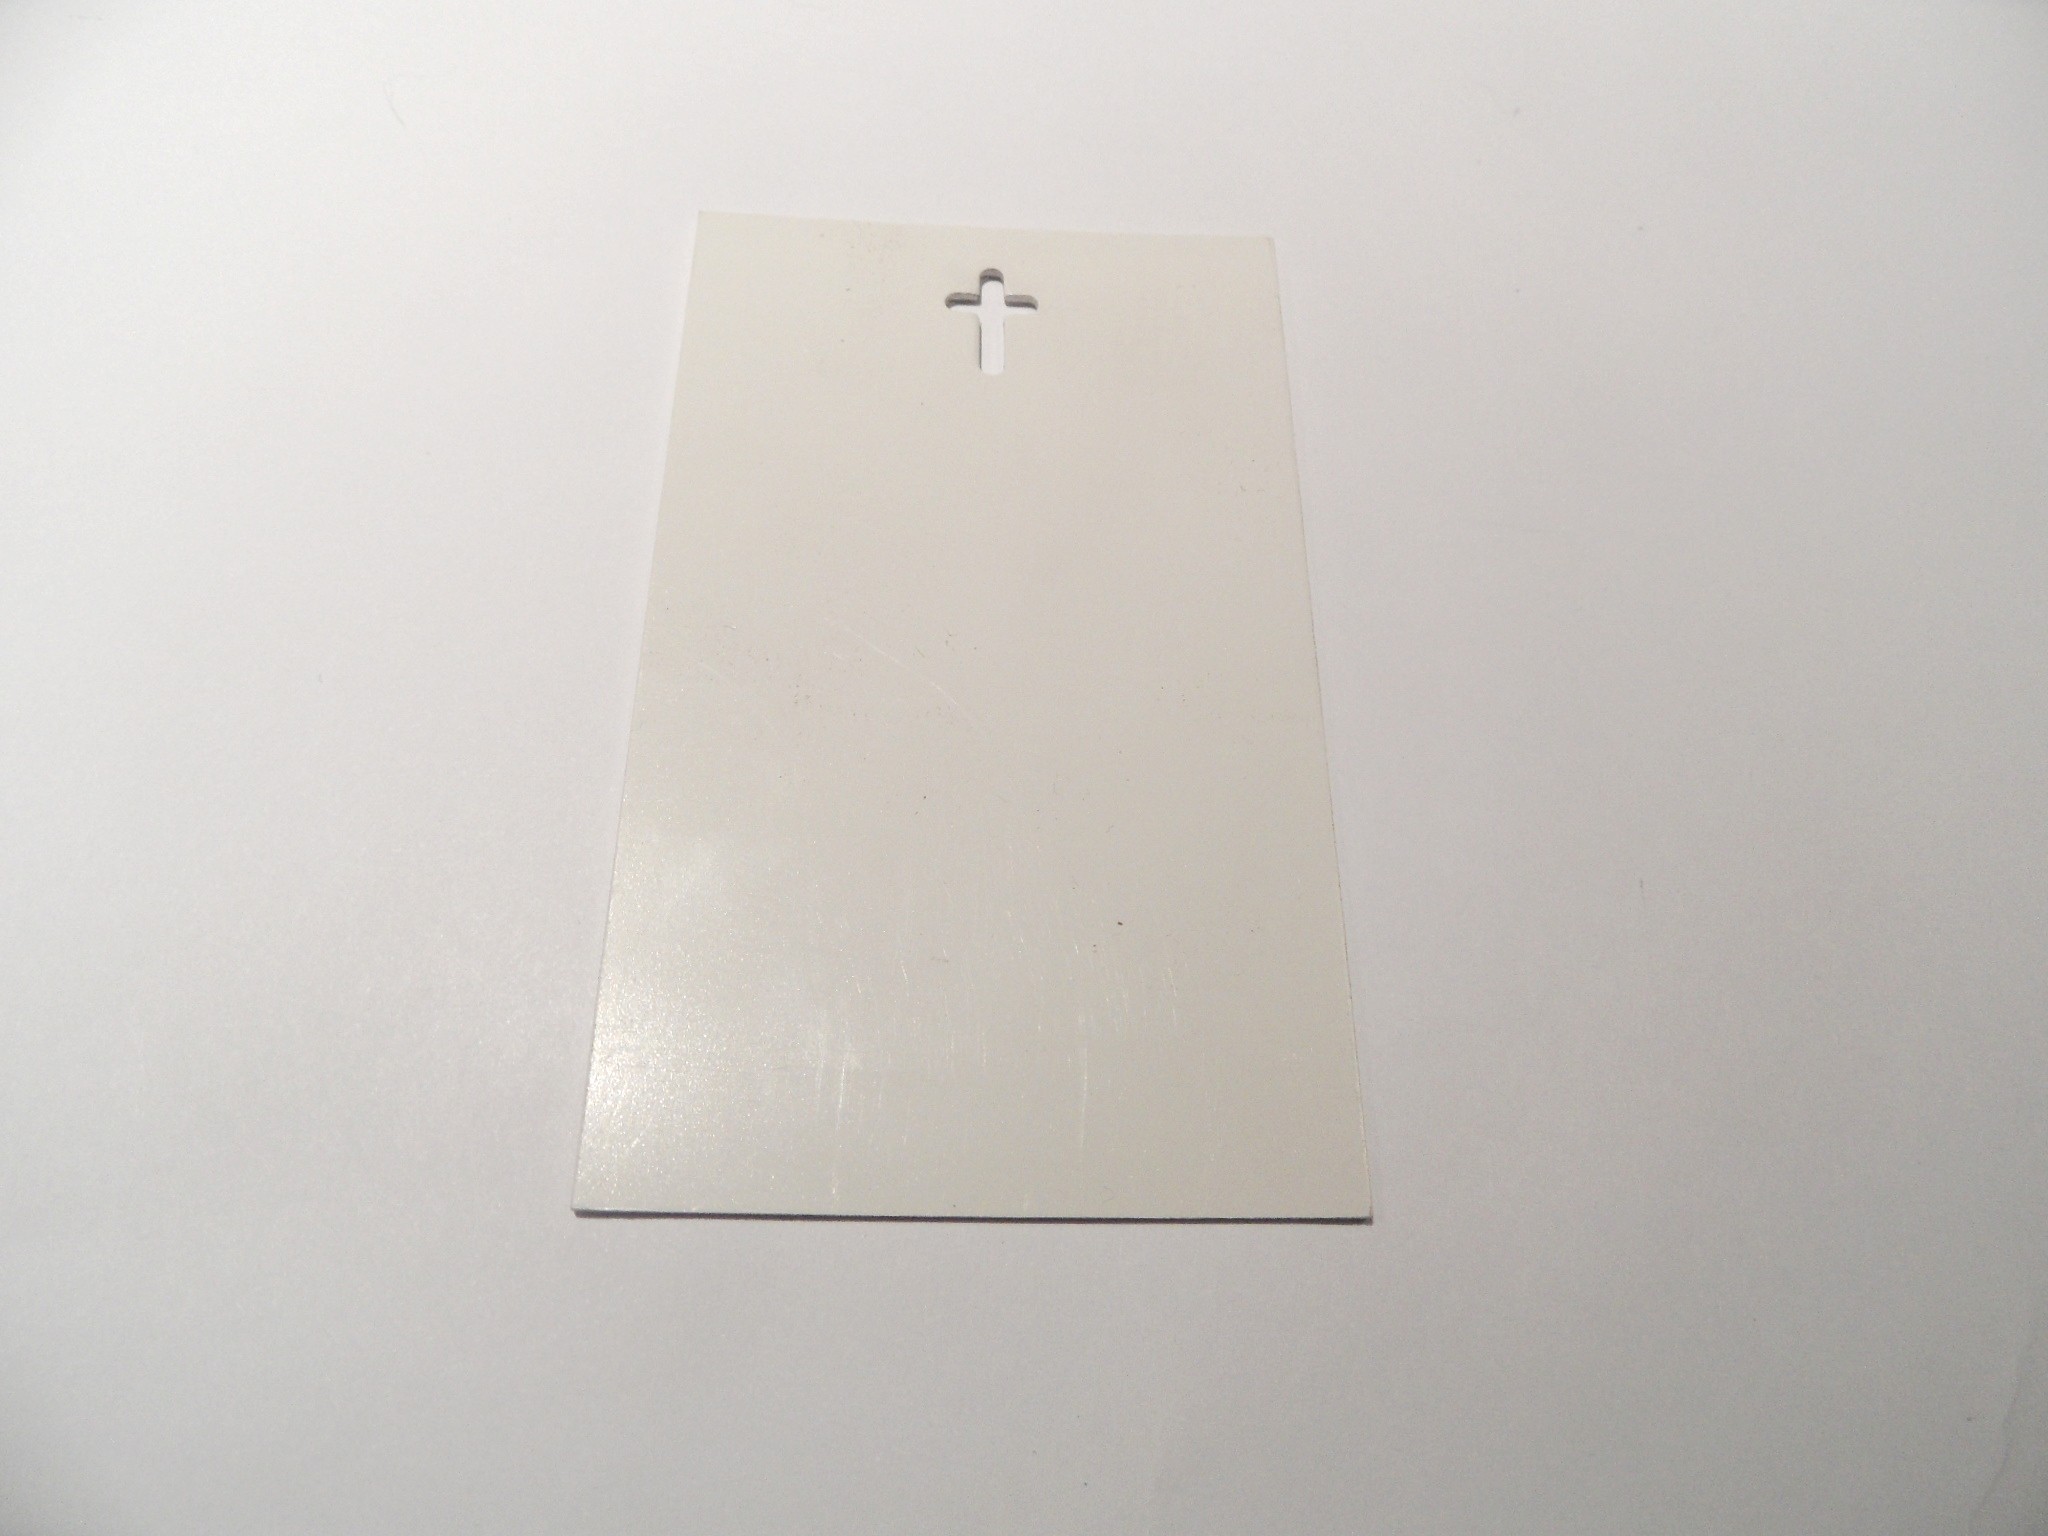 etiq-cross-ep-045-5x11cm-blanc